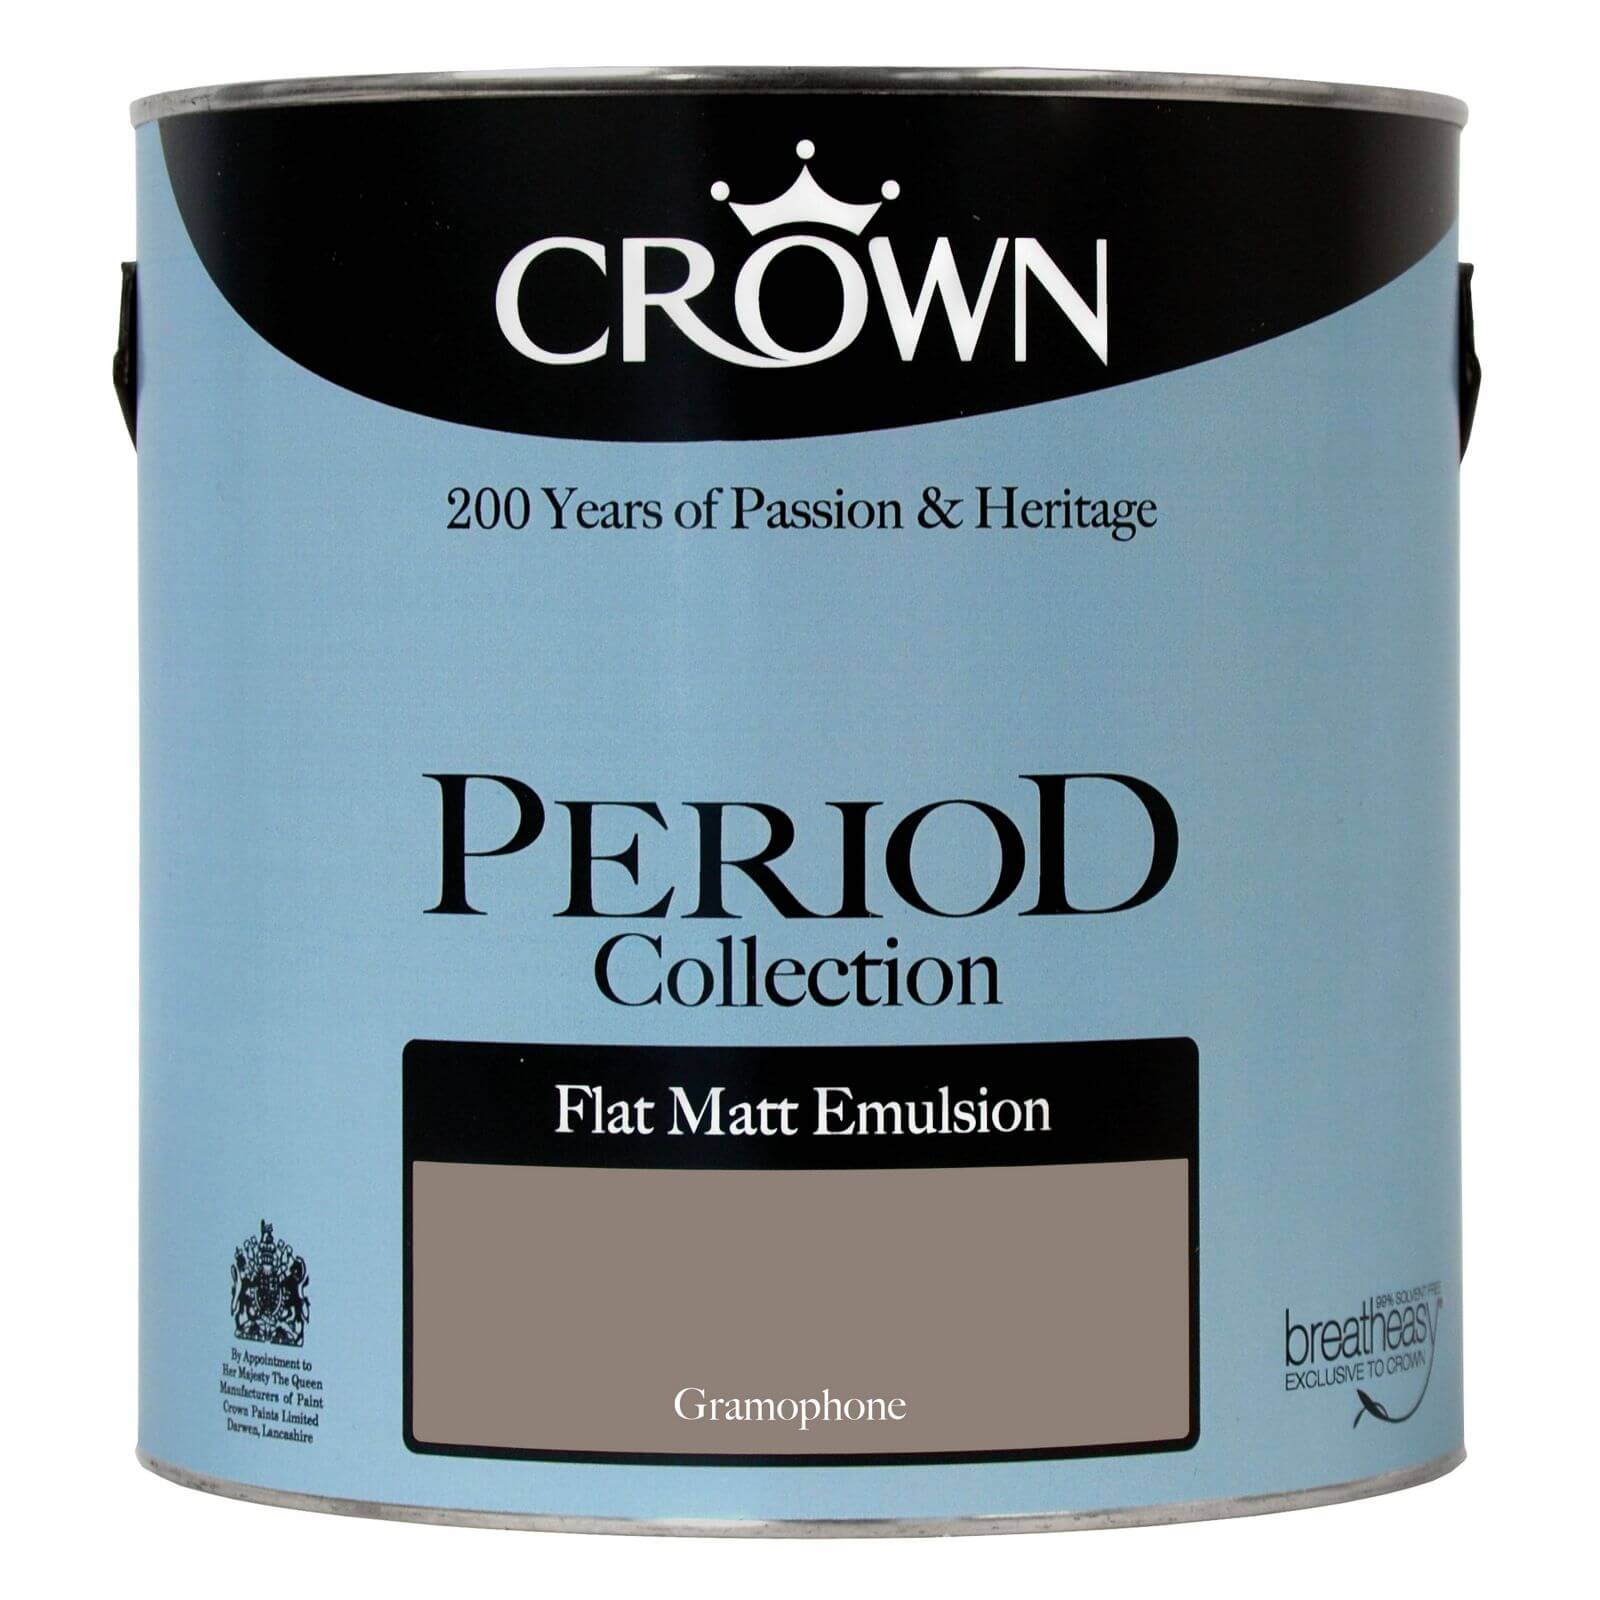 Crown Period Collection Gramophone - Flat Matt Emulsion Paint - 2.5L